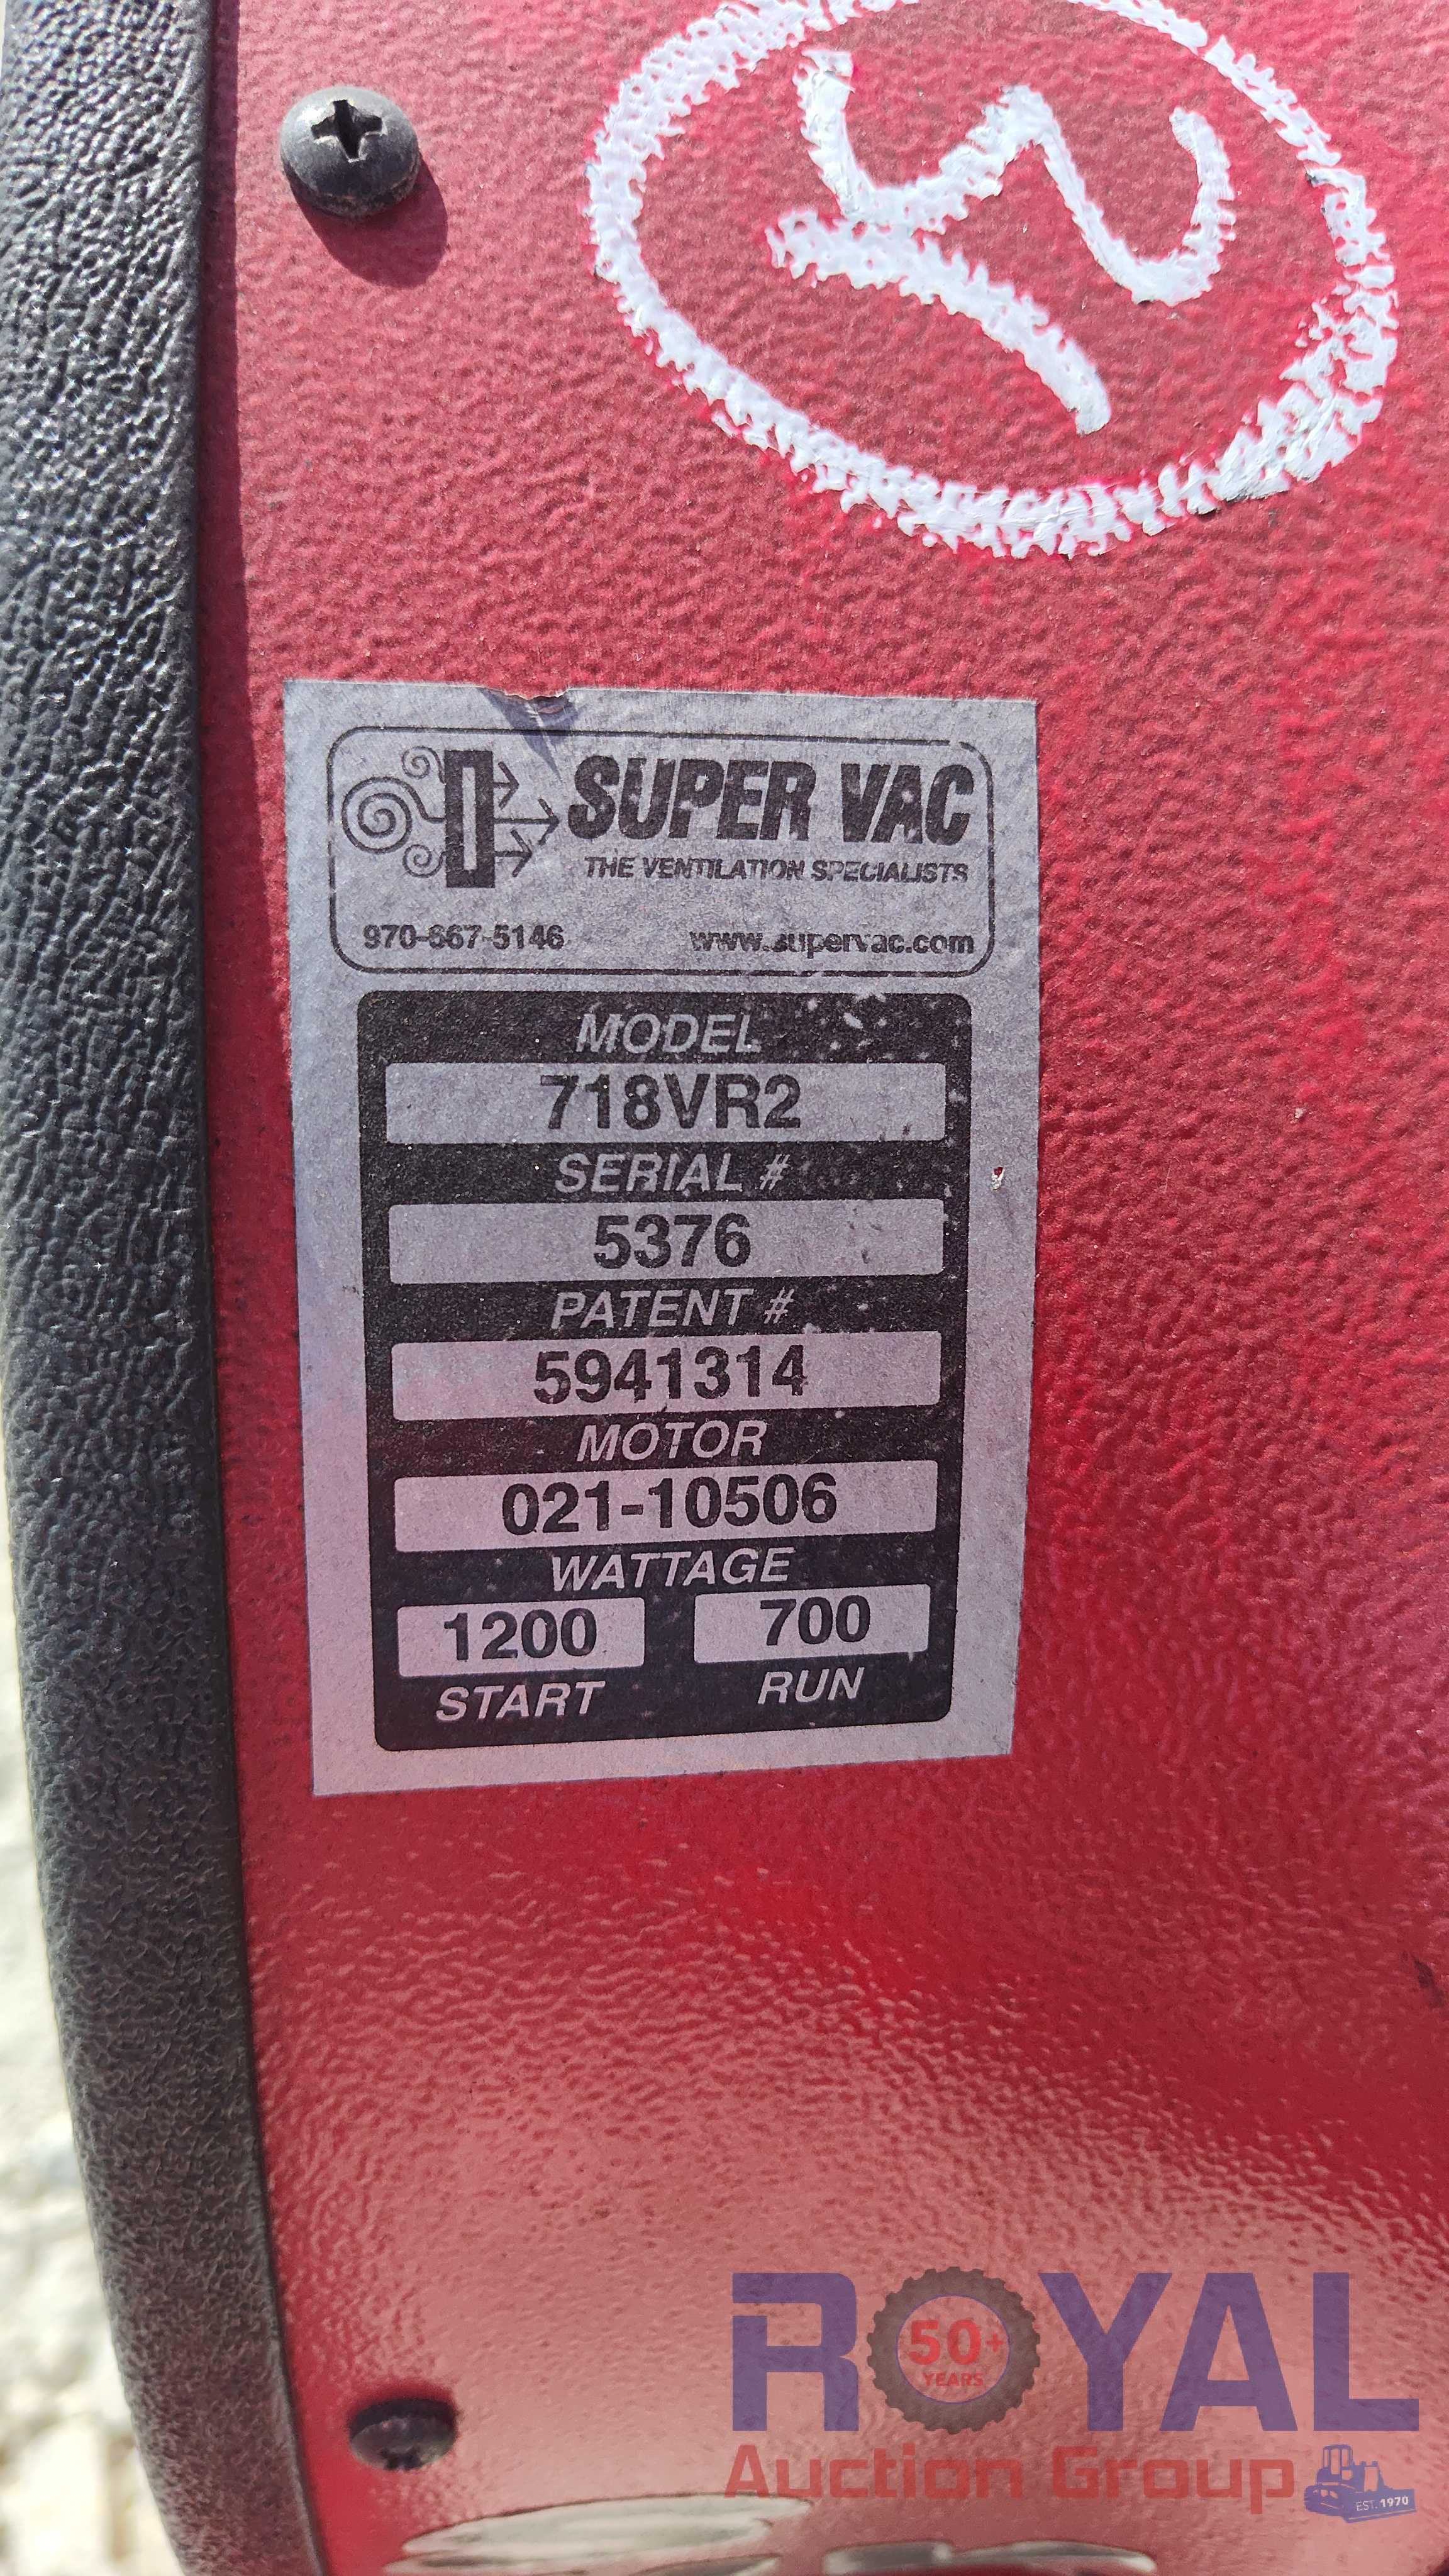 Super Vac 718VR2 Ventilation Fan